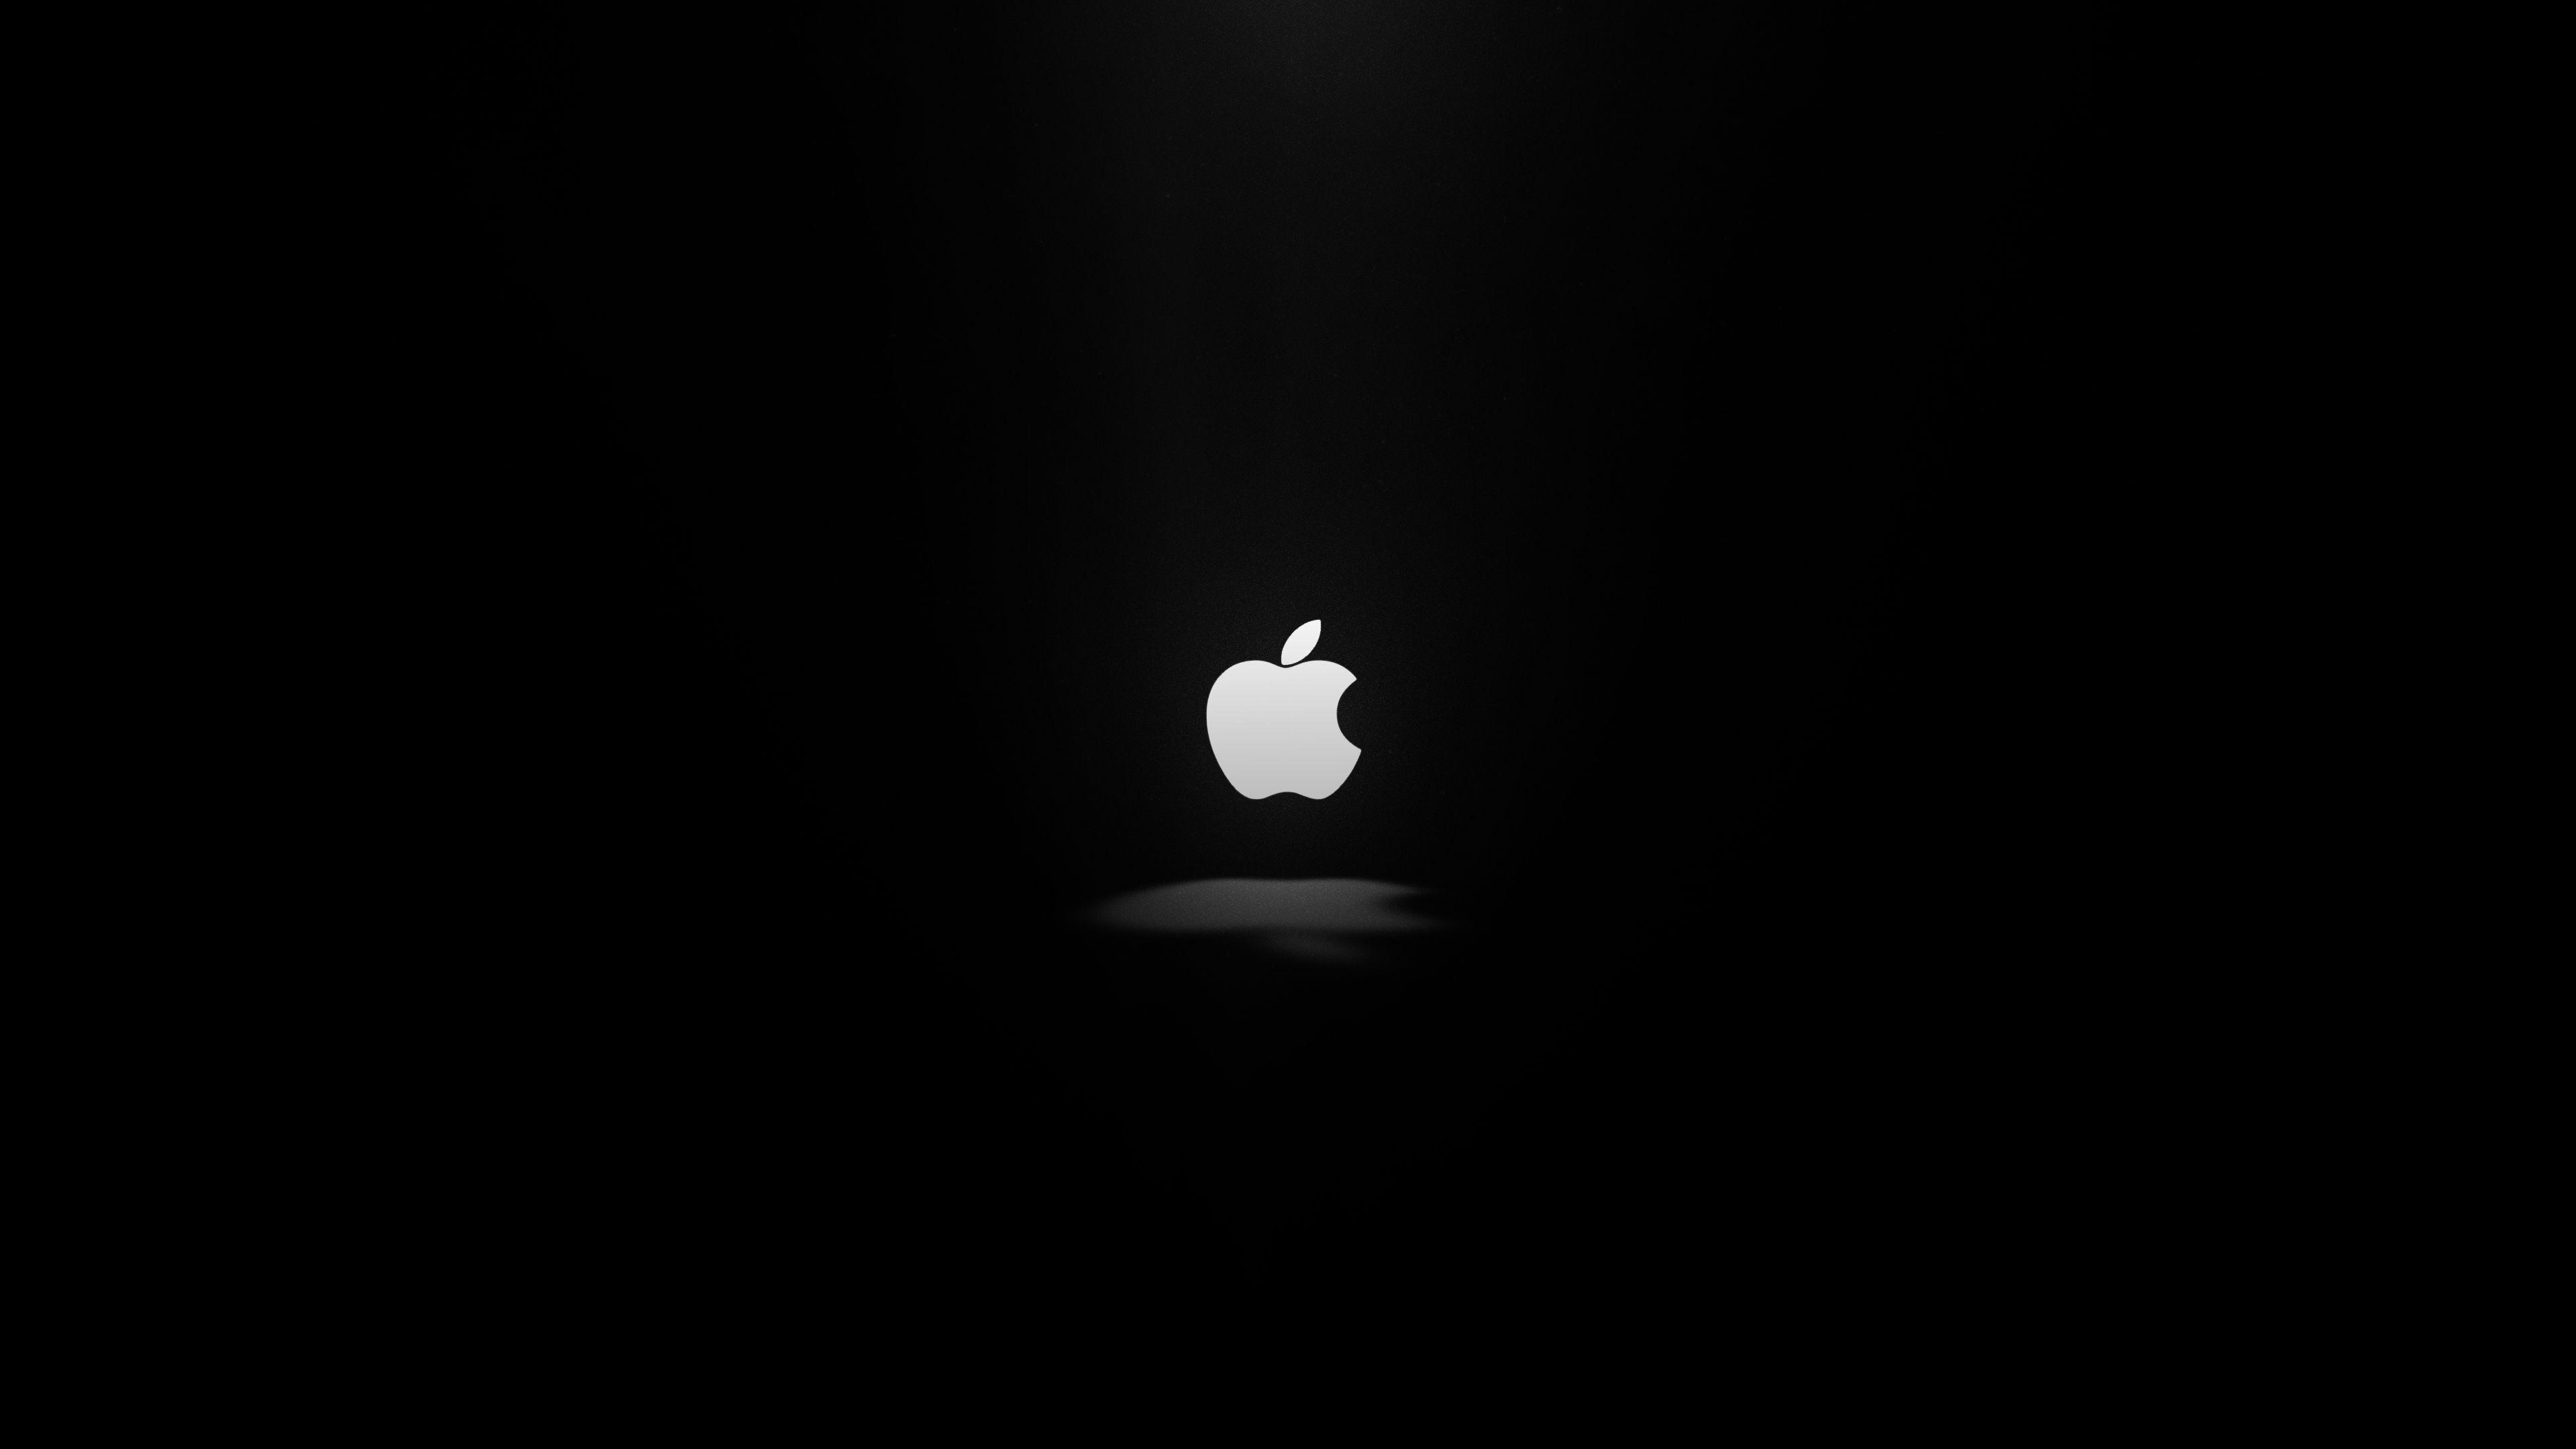 4K-resolution Black and White Logo - Wallpaper Apple, Dark, Logo, 4K, Minimal, #9339